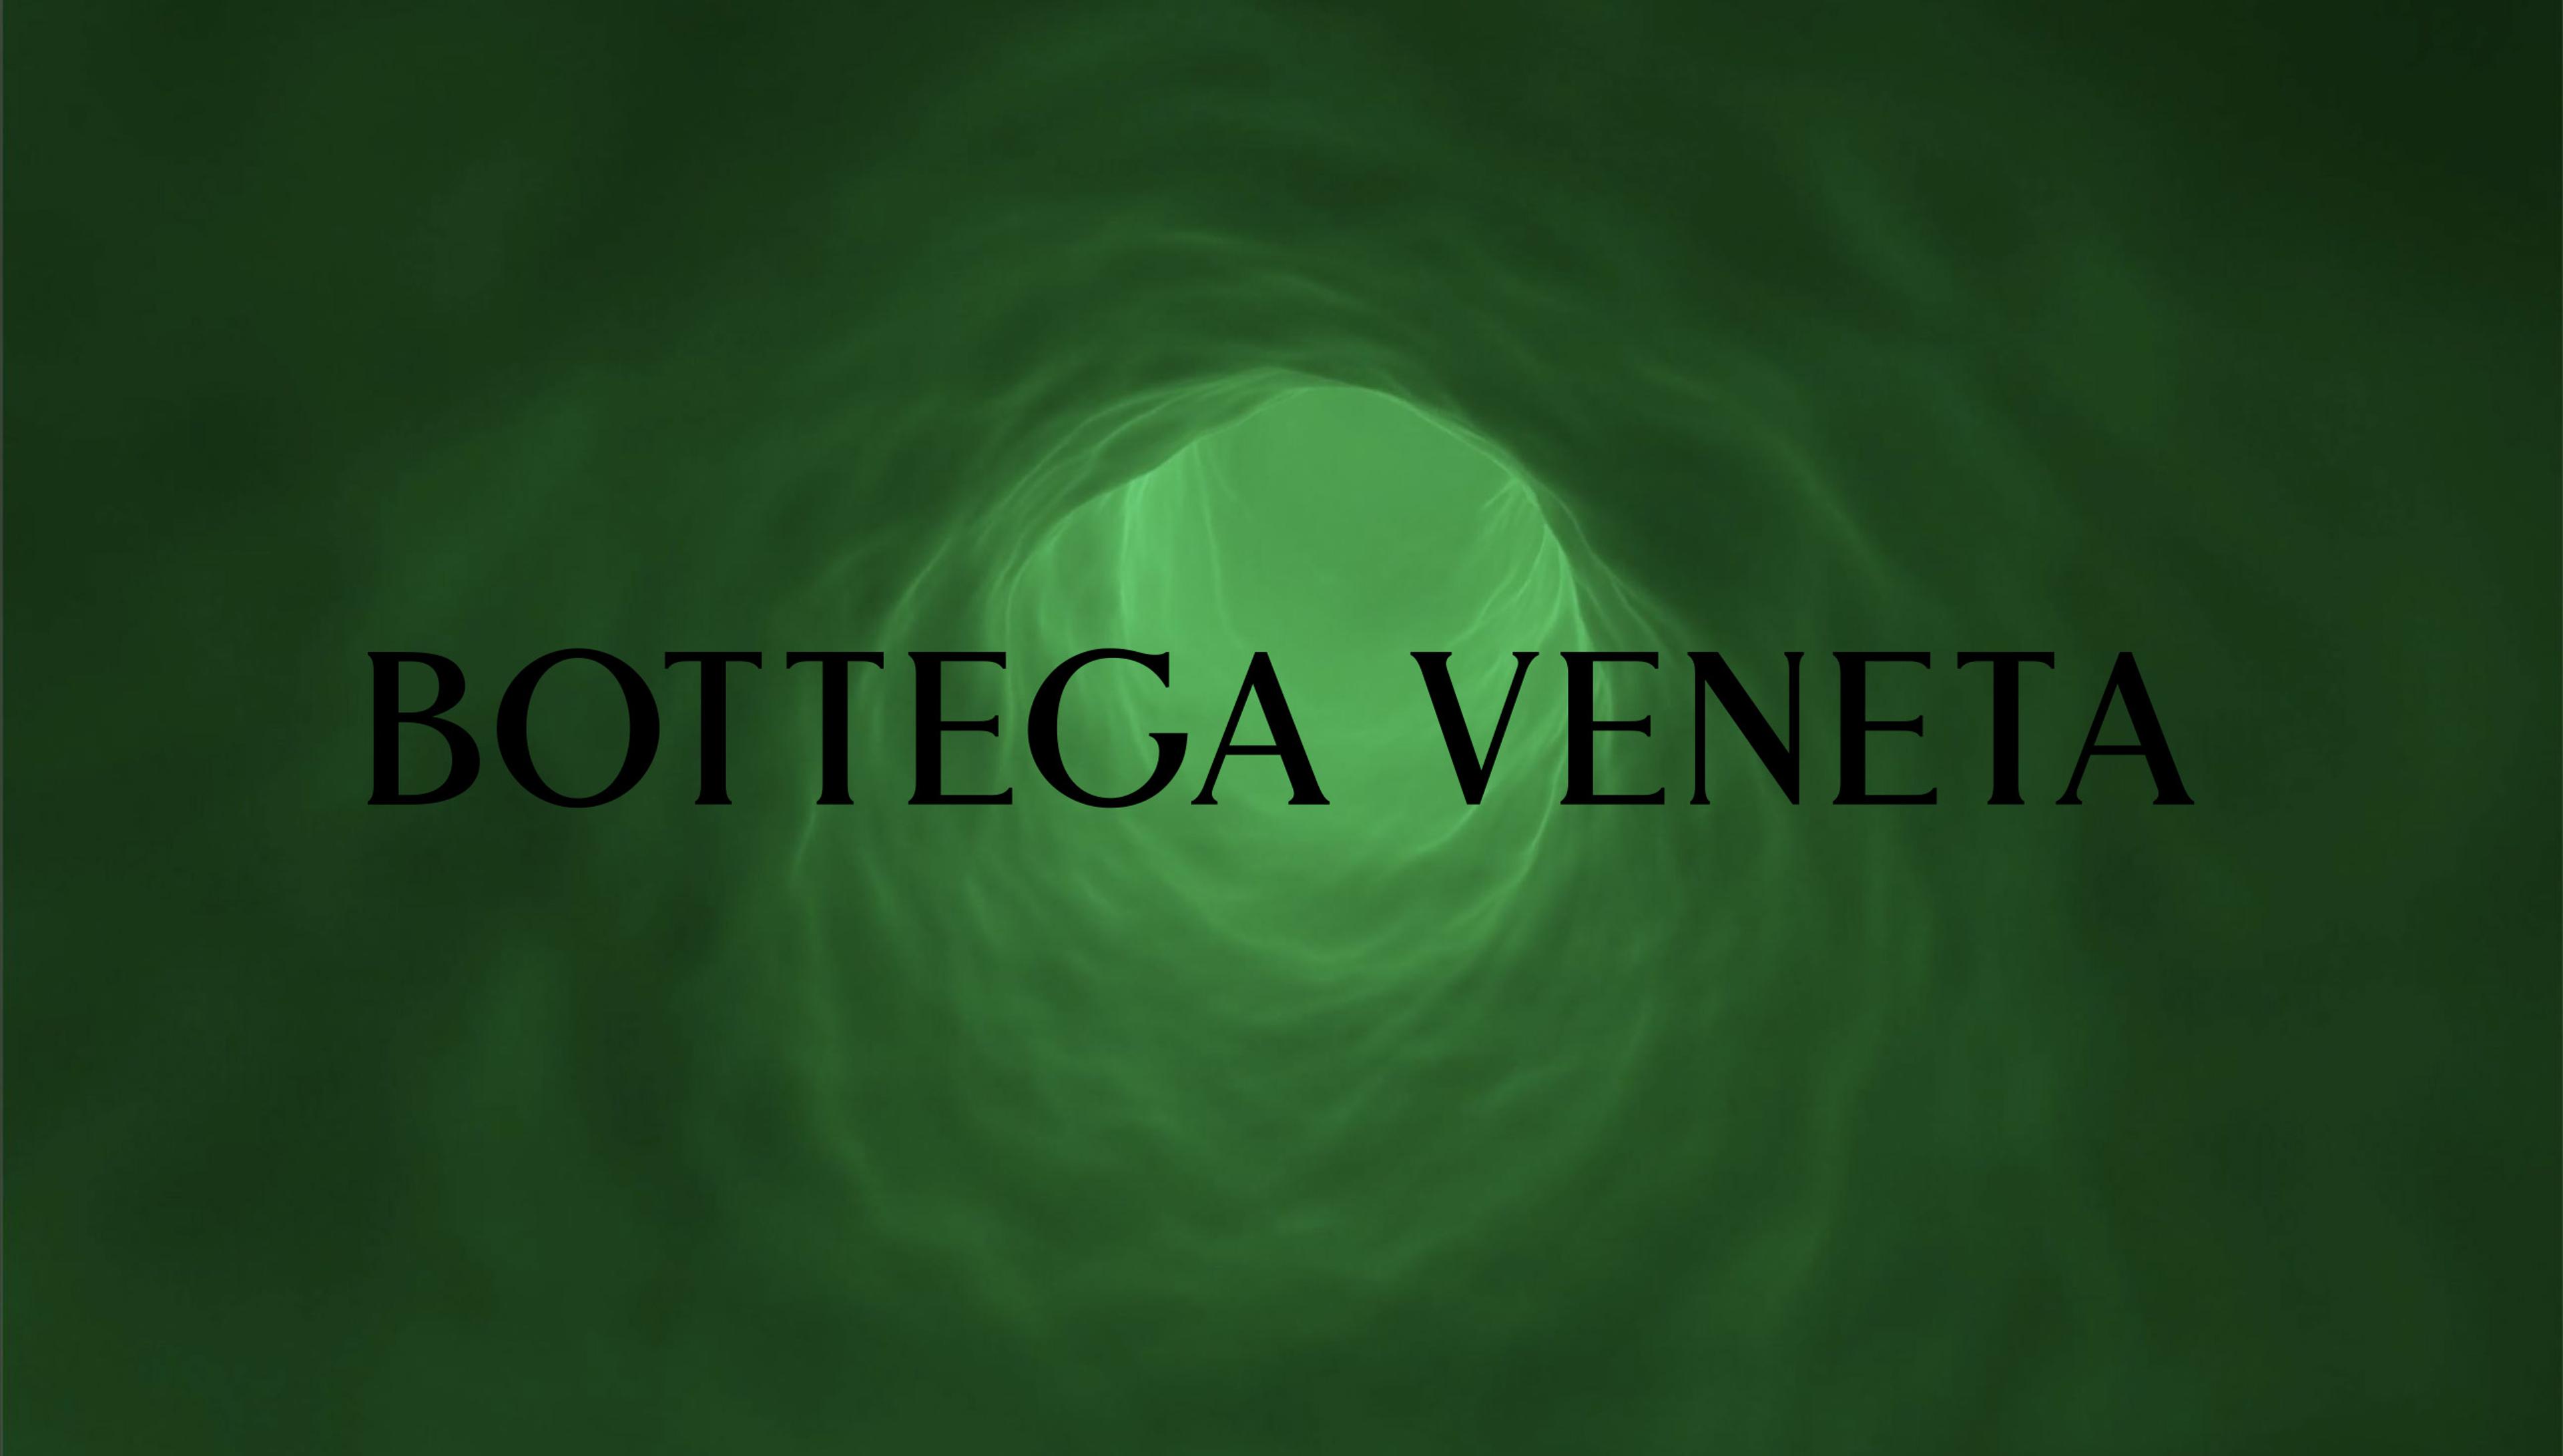 the logo for bottega veneta is on a green background .